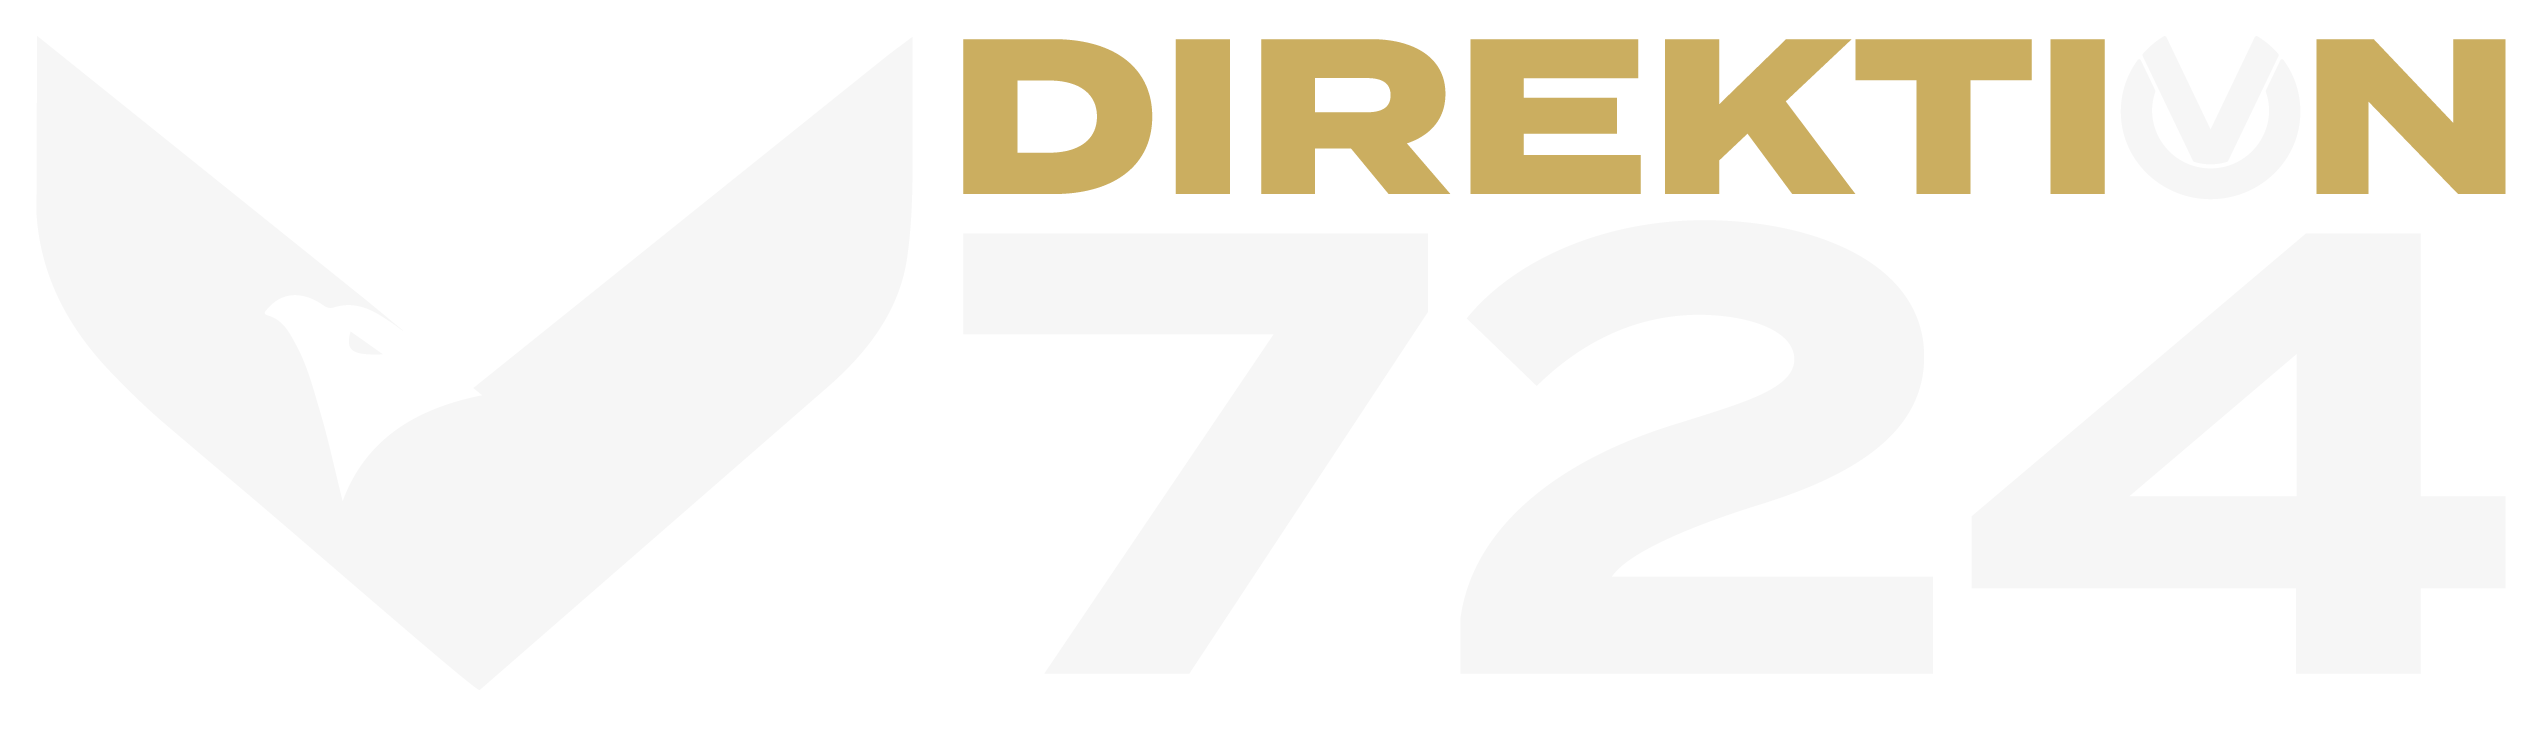 Direktion 724 - Logo